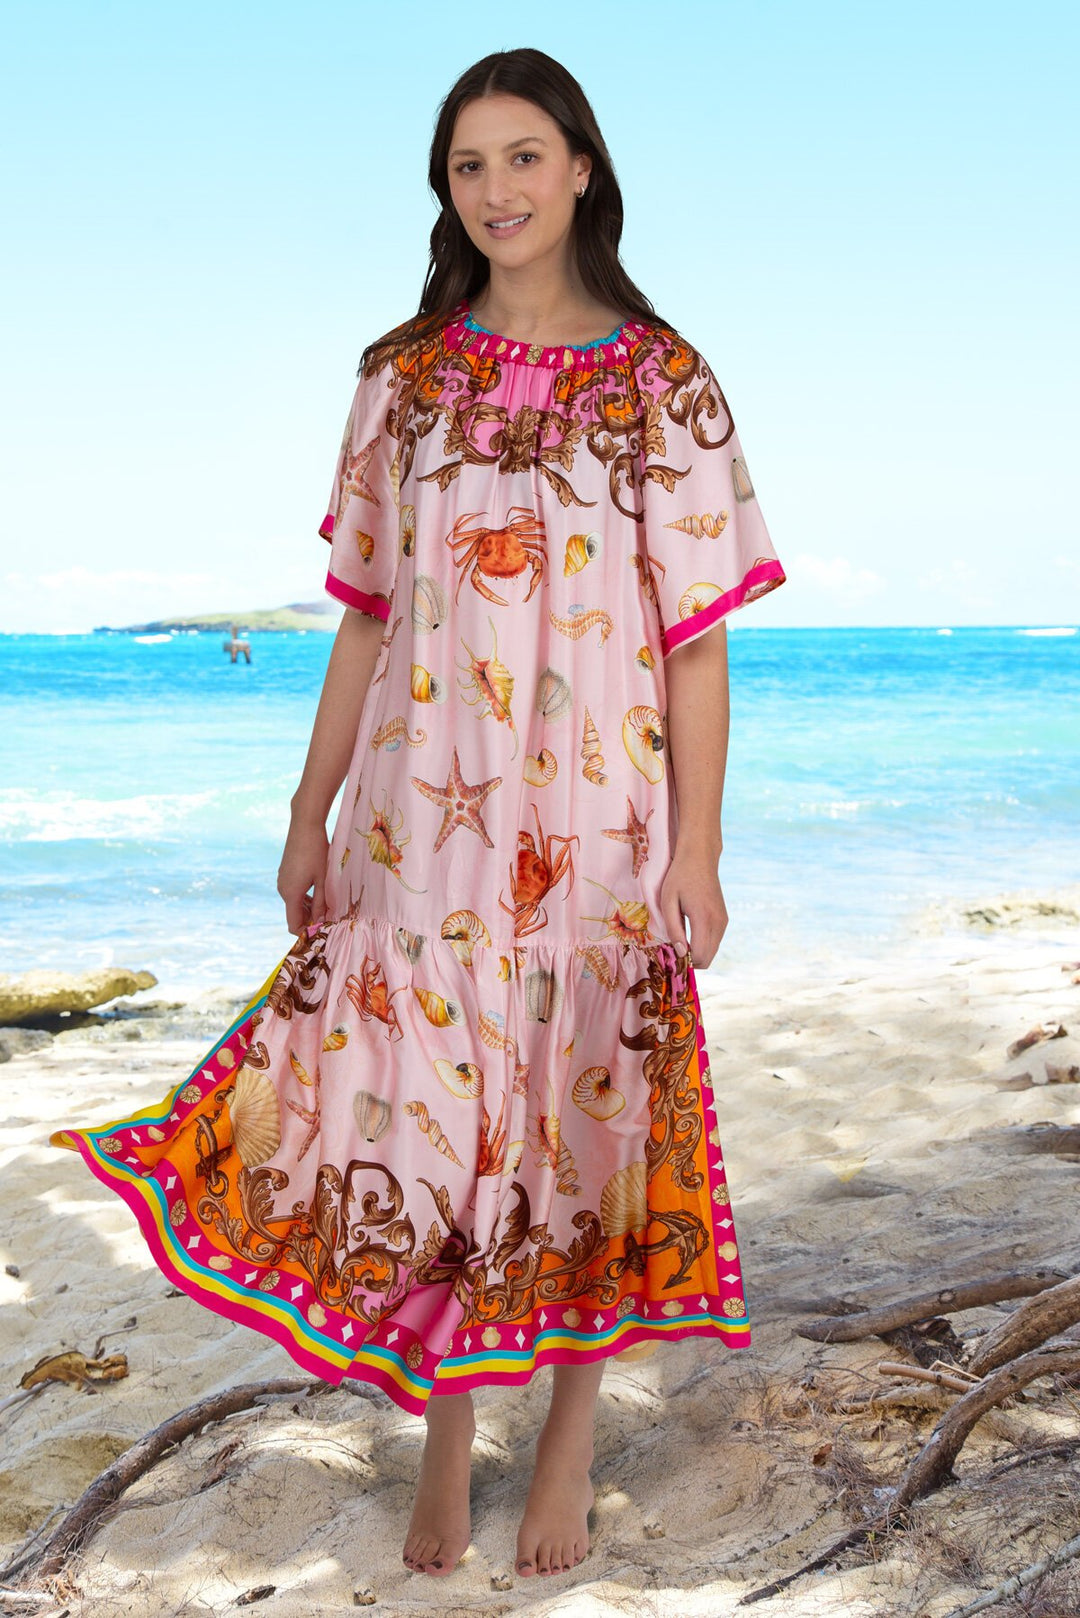 SOLAR ECLIPSE Dress (Candy Shells)